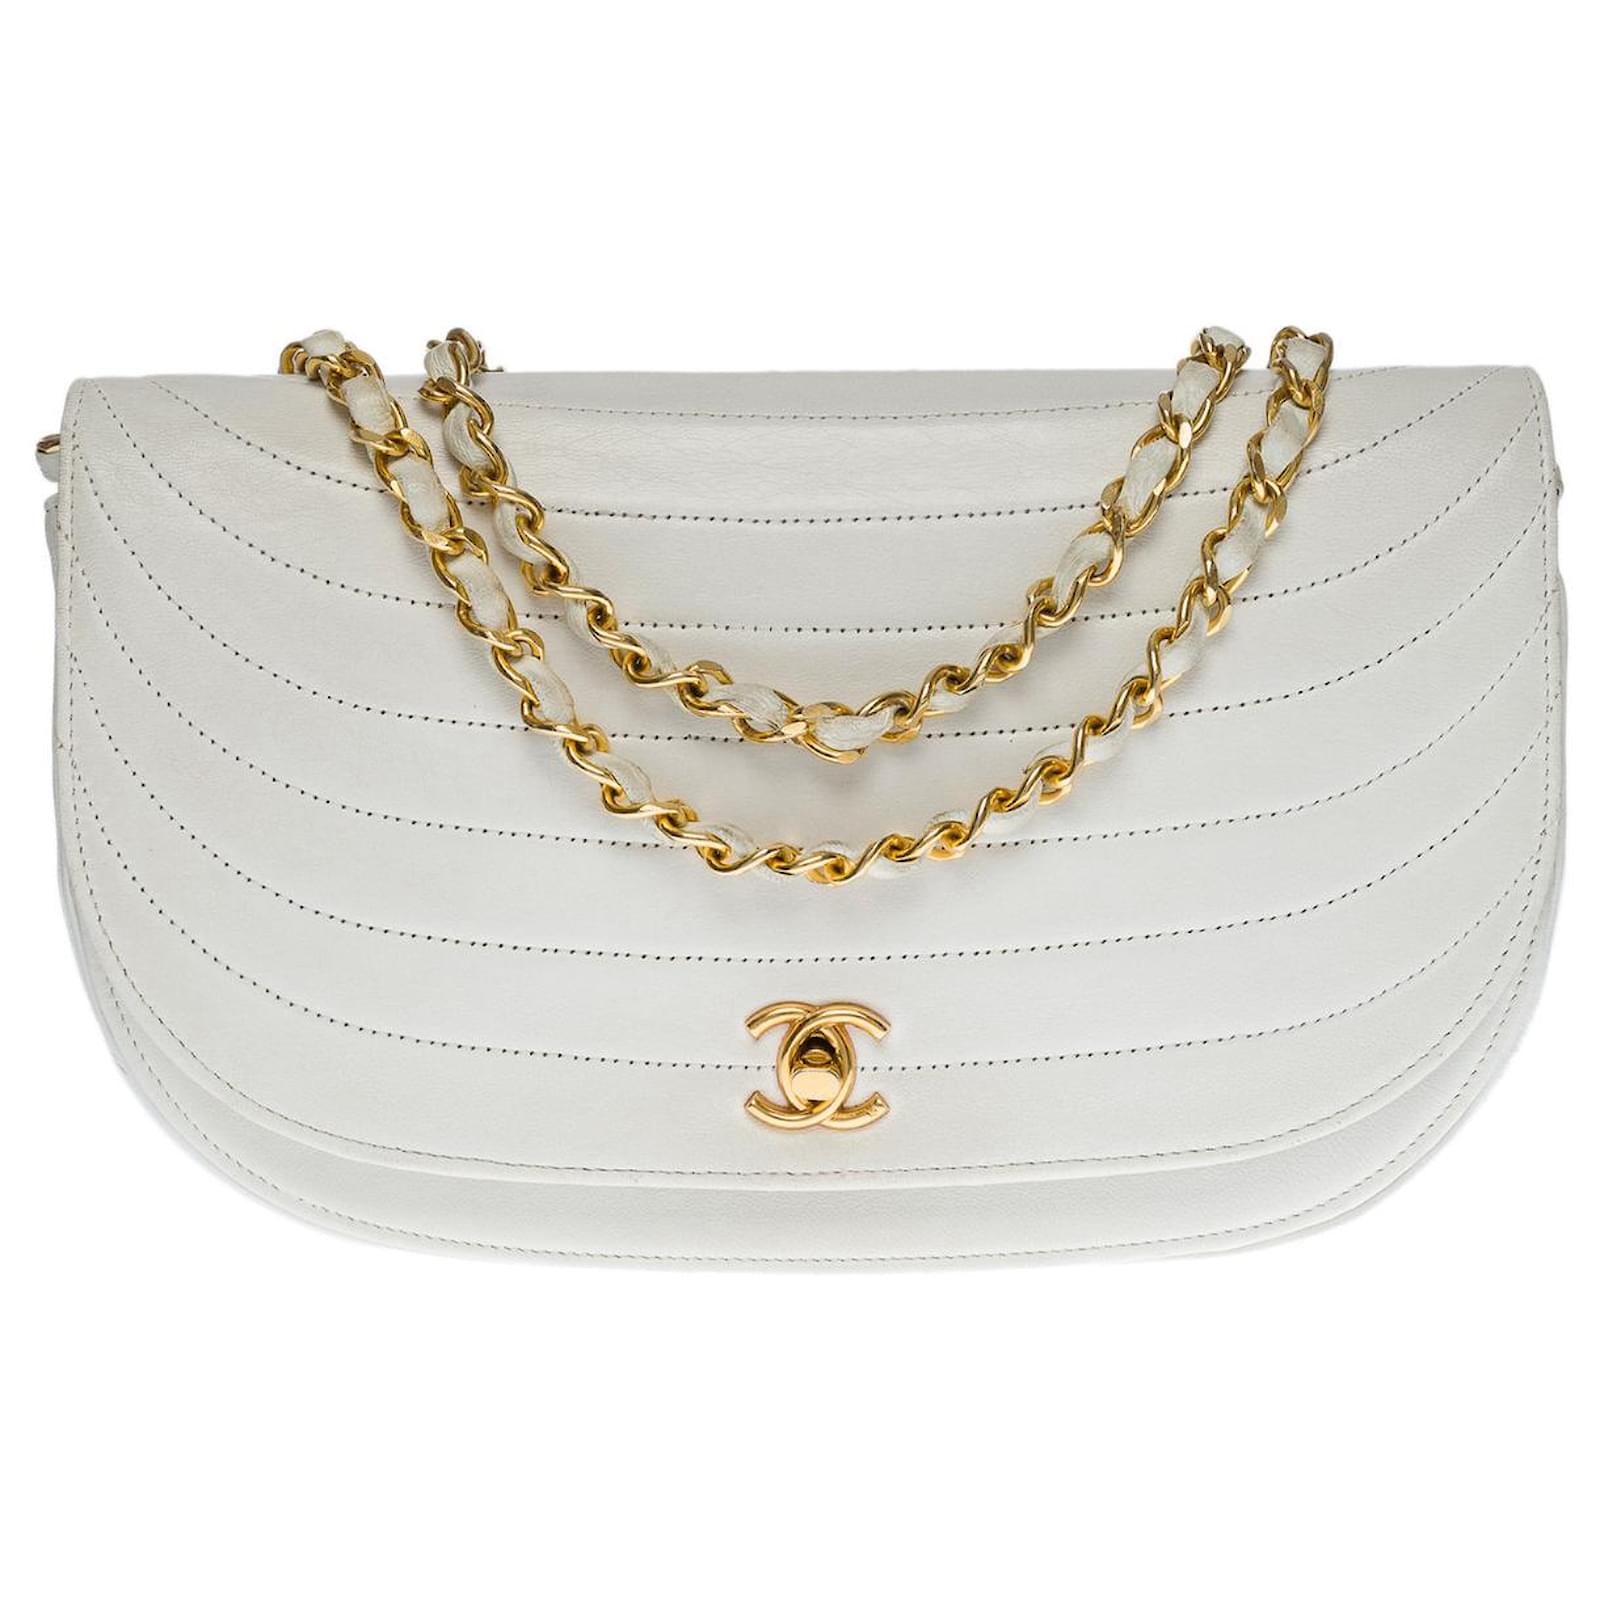 Handbags Chanel Chanel Classic Flap Bag Half-Moon Crossbody Bag in White Lamb Leather -100669